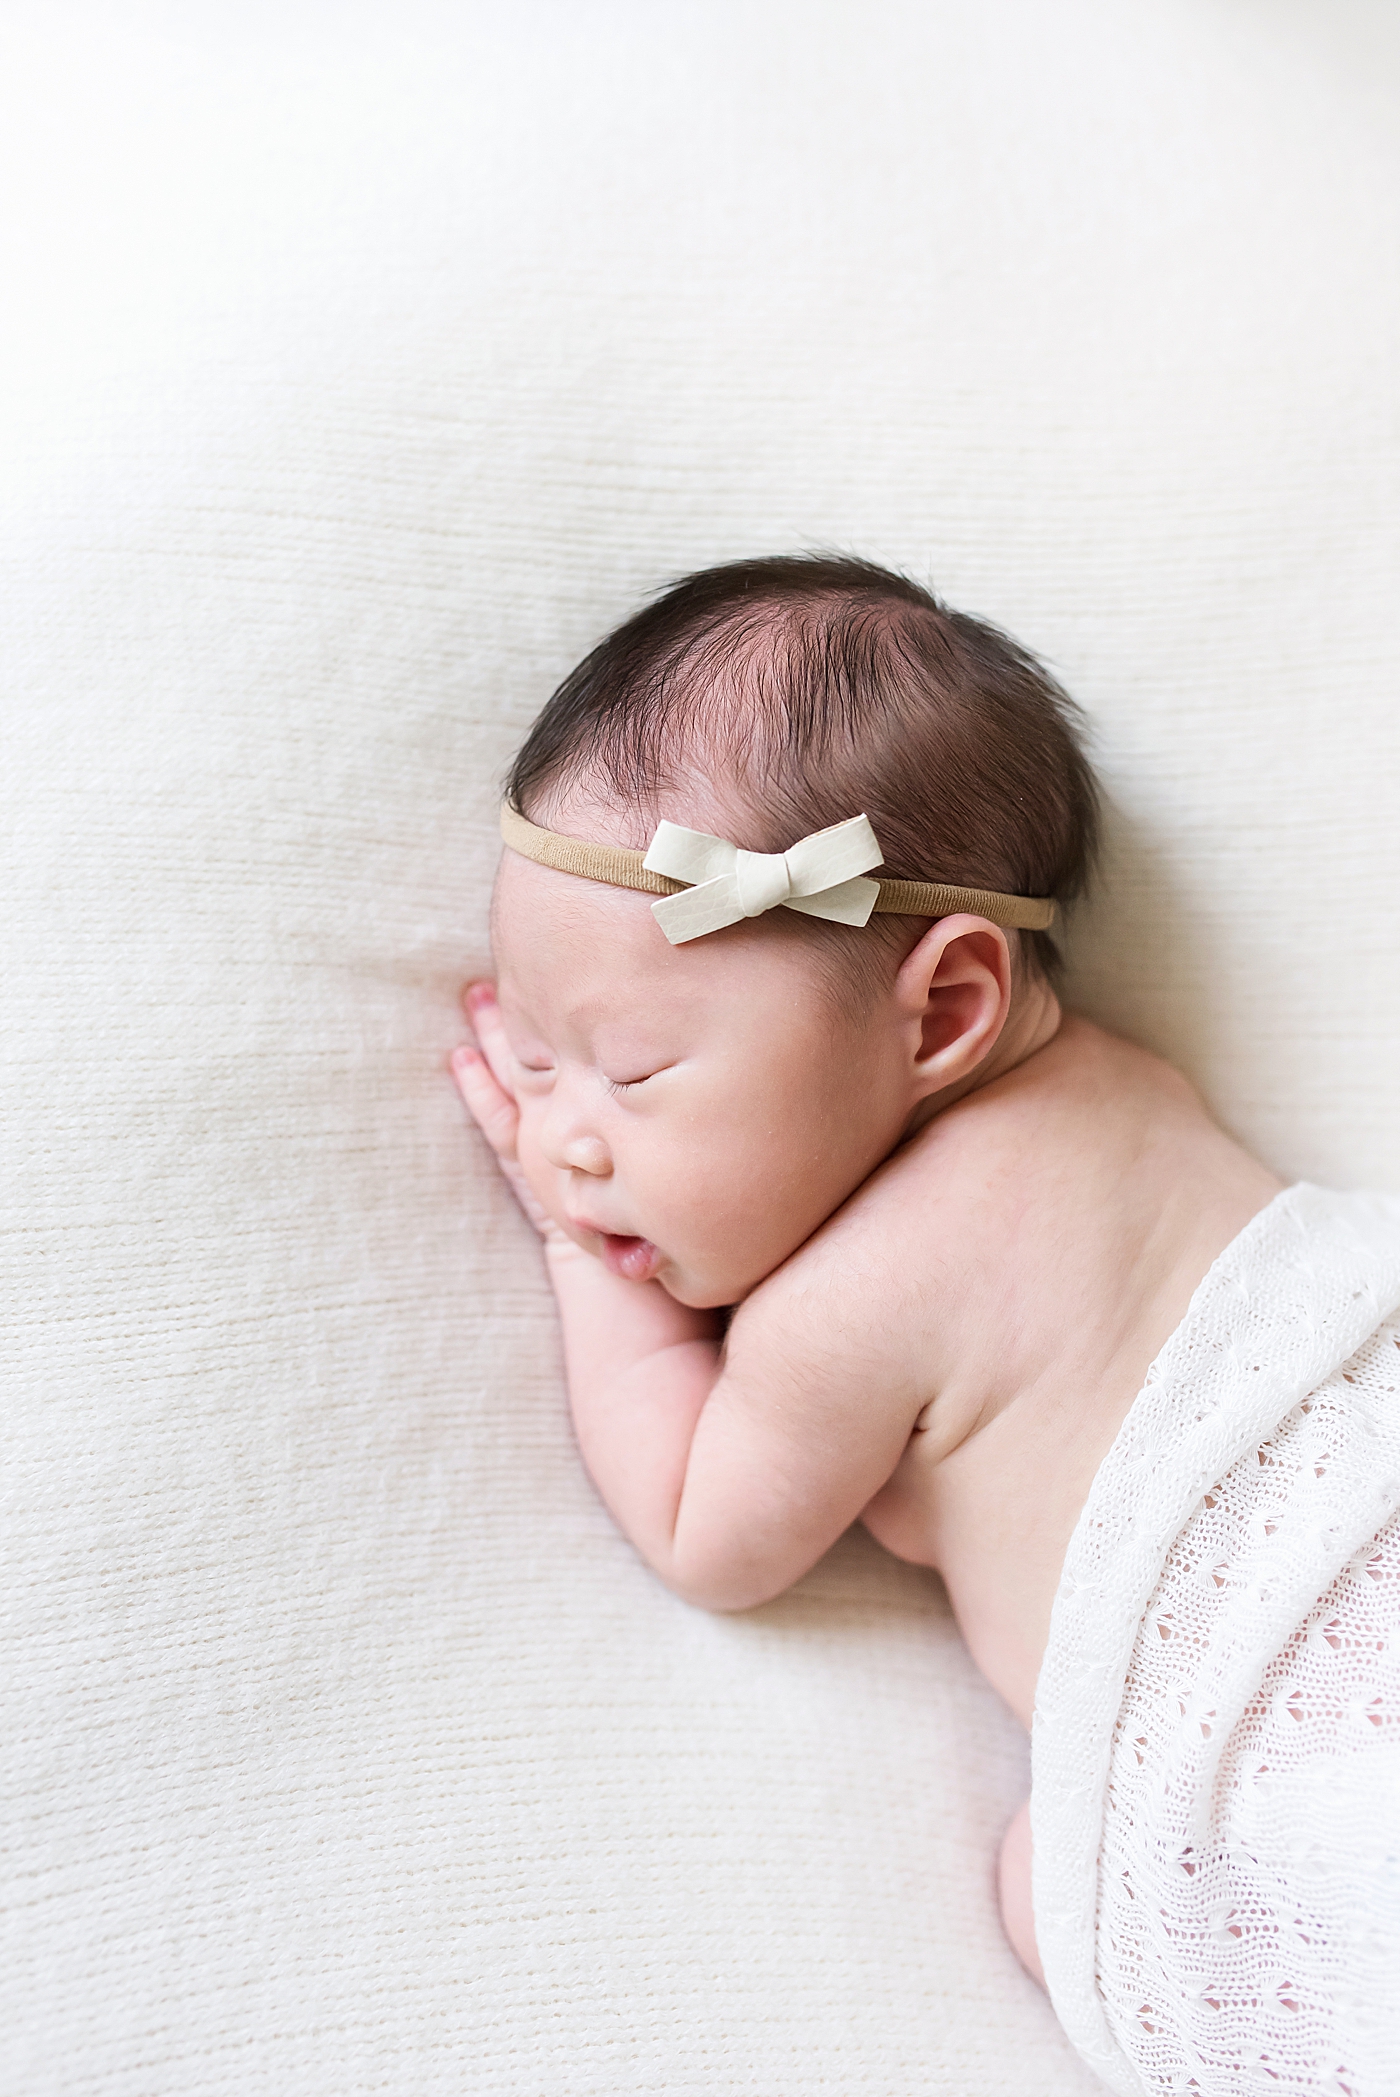 Sleeping baby girl wearing a green bow headband | Photo by Anna Wisjo Photography